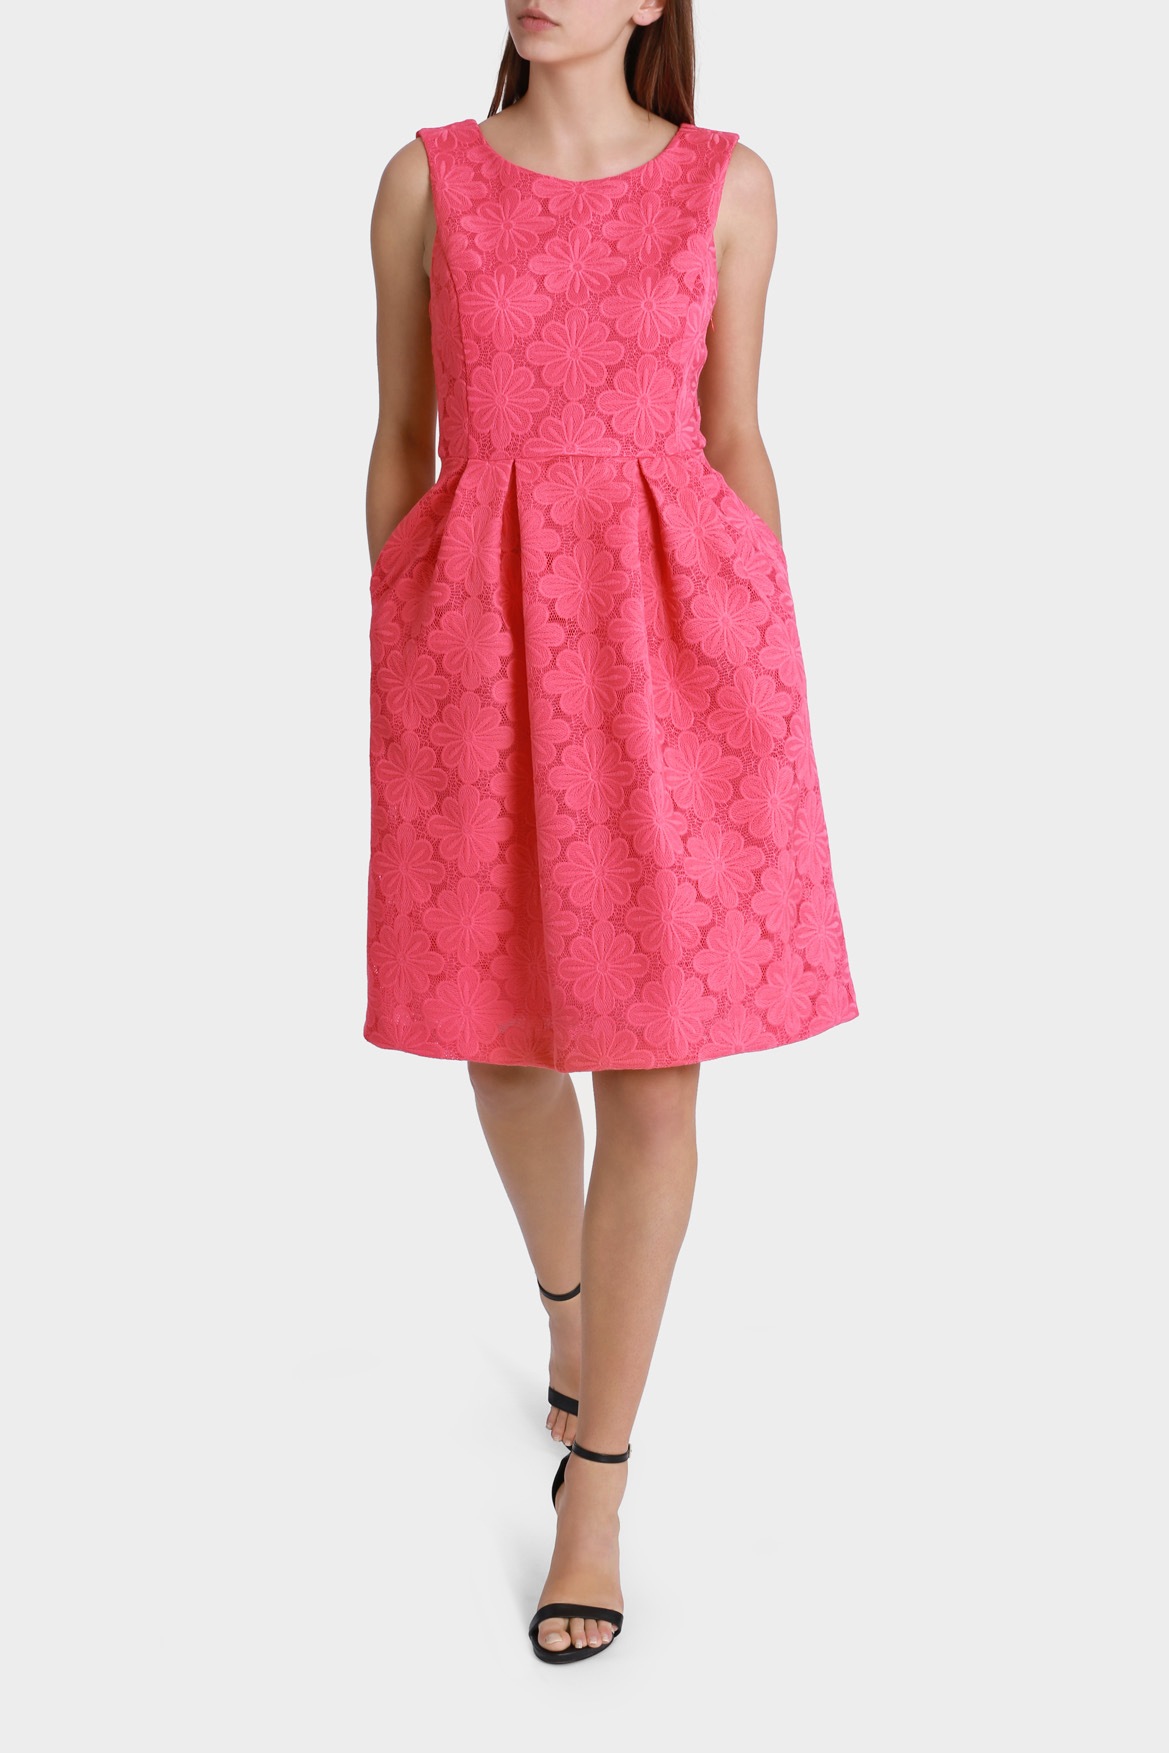 Hi There From Karen Walker | Strawberry Texture Midi Dress | Myer Online